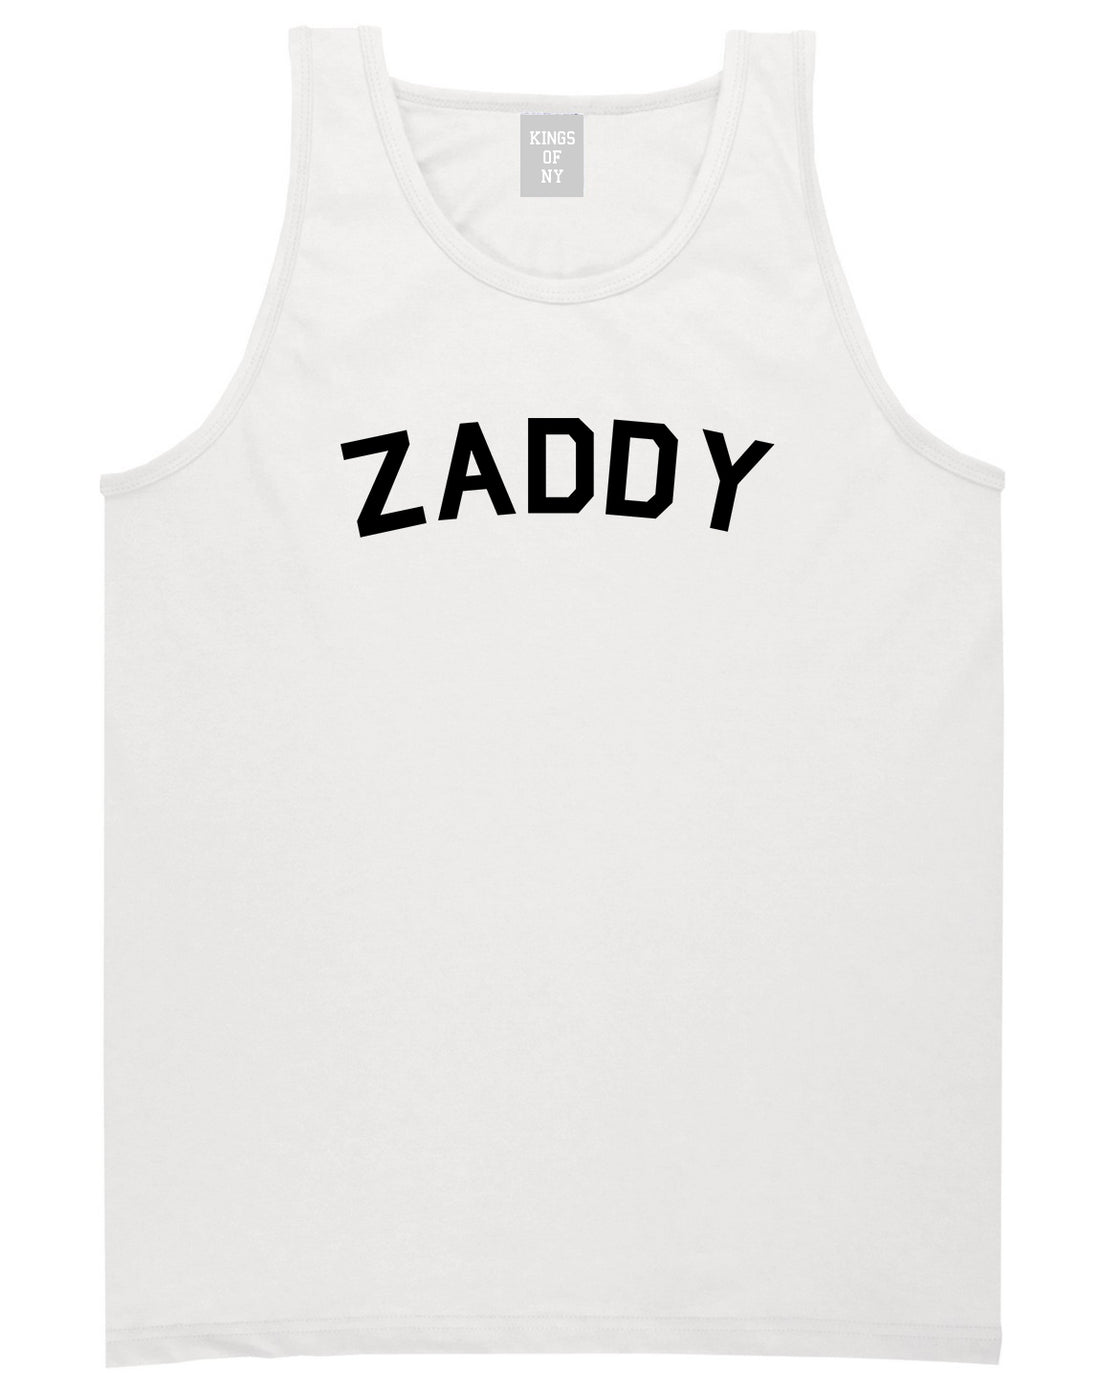 Zaddy Mens Tank Top Shirt White